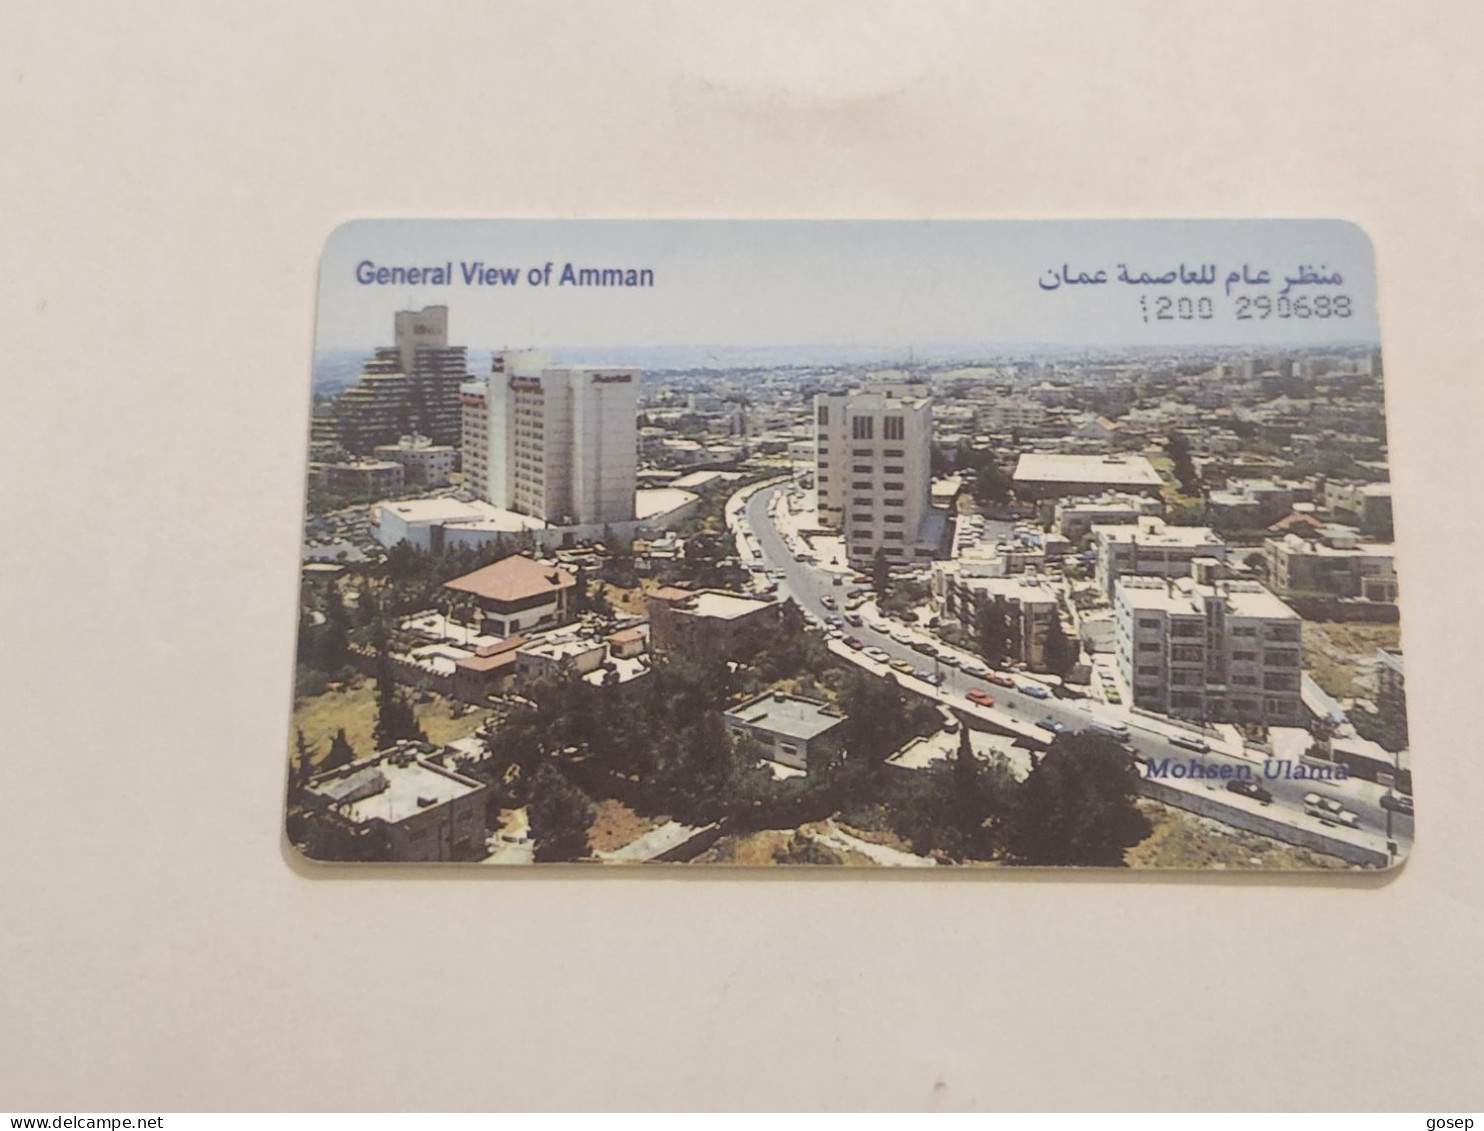 JORDAN-(JO-ALO-0028)-King Abdullah Mosque-(128)-(1200-290688)-(15JD)-(9/2000)-used Card+1card Prepiad Free - Jordanie